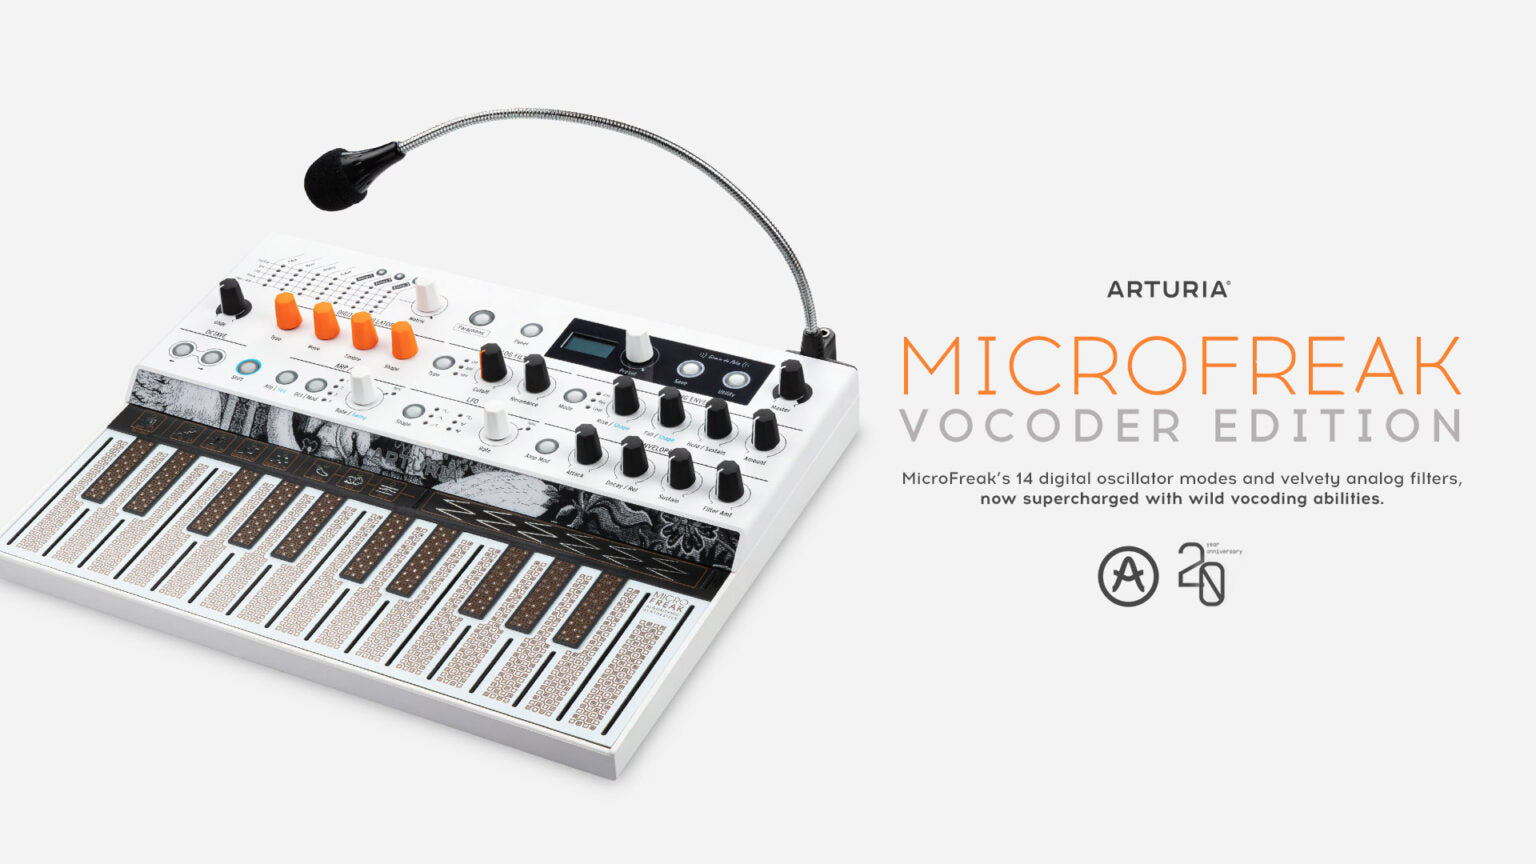 Arturia Microfreak Vocoder Edition